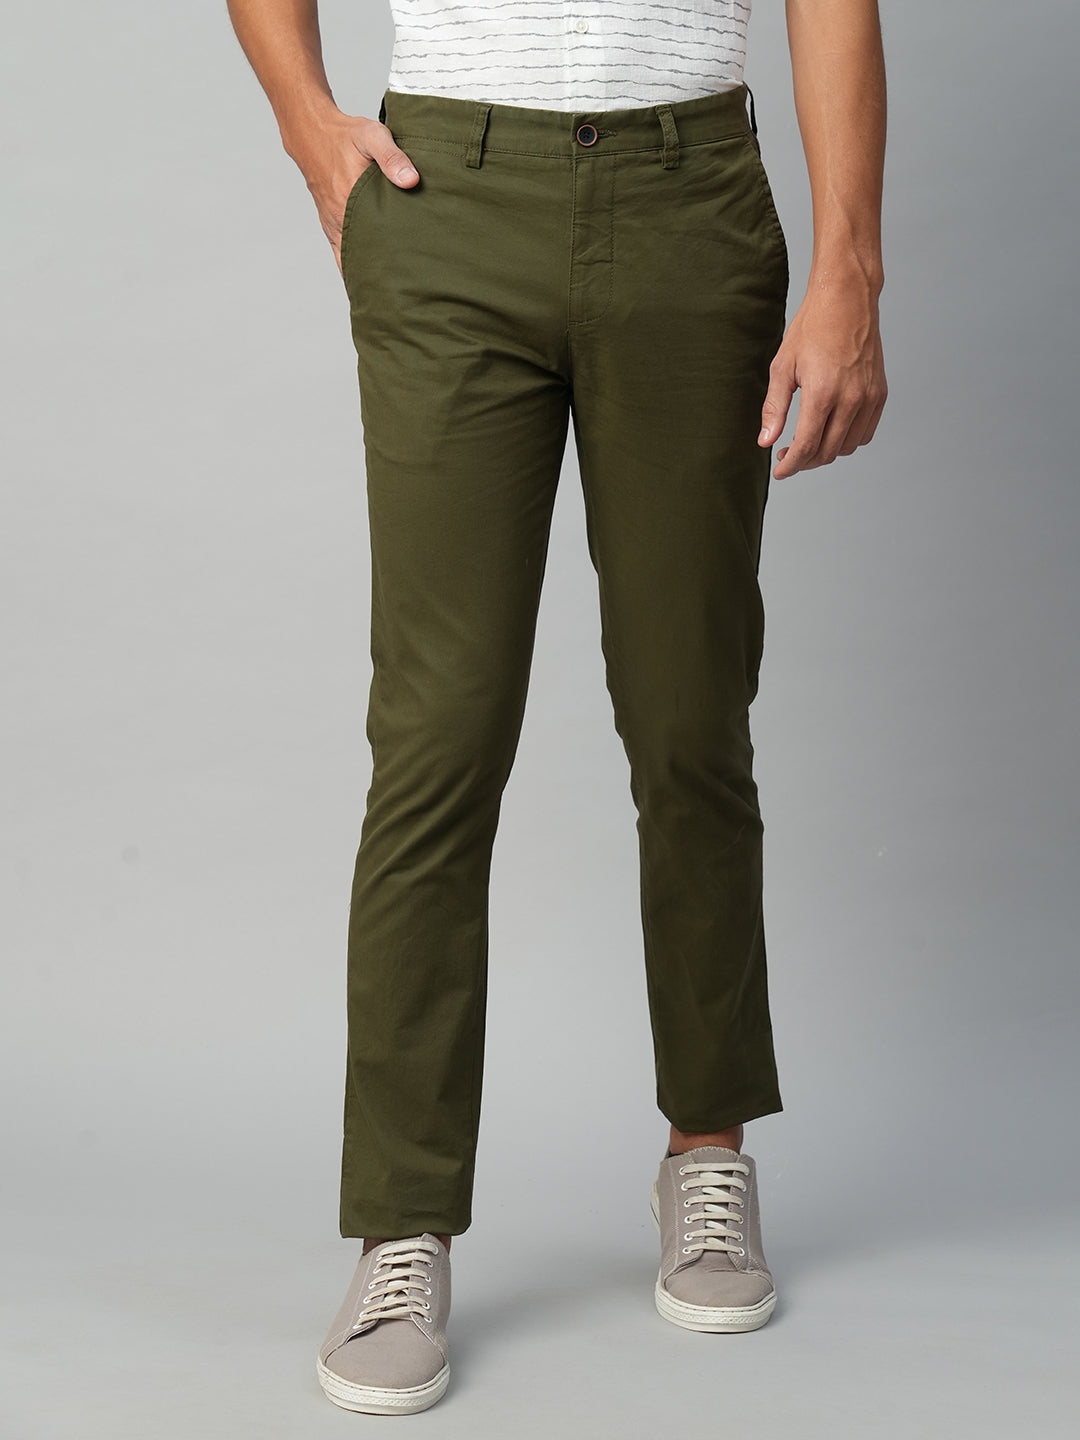 Men's Olive Cotton Lycra Slim Fit Pant